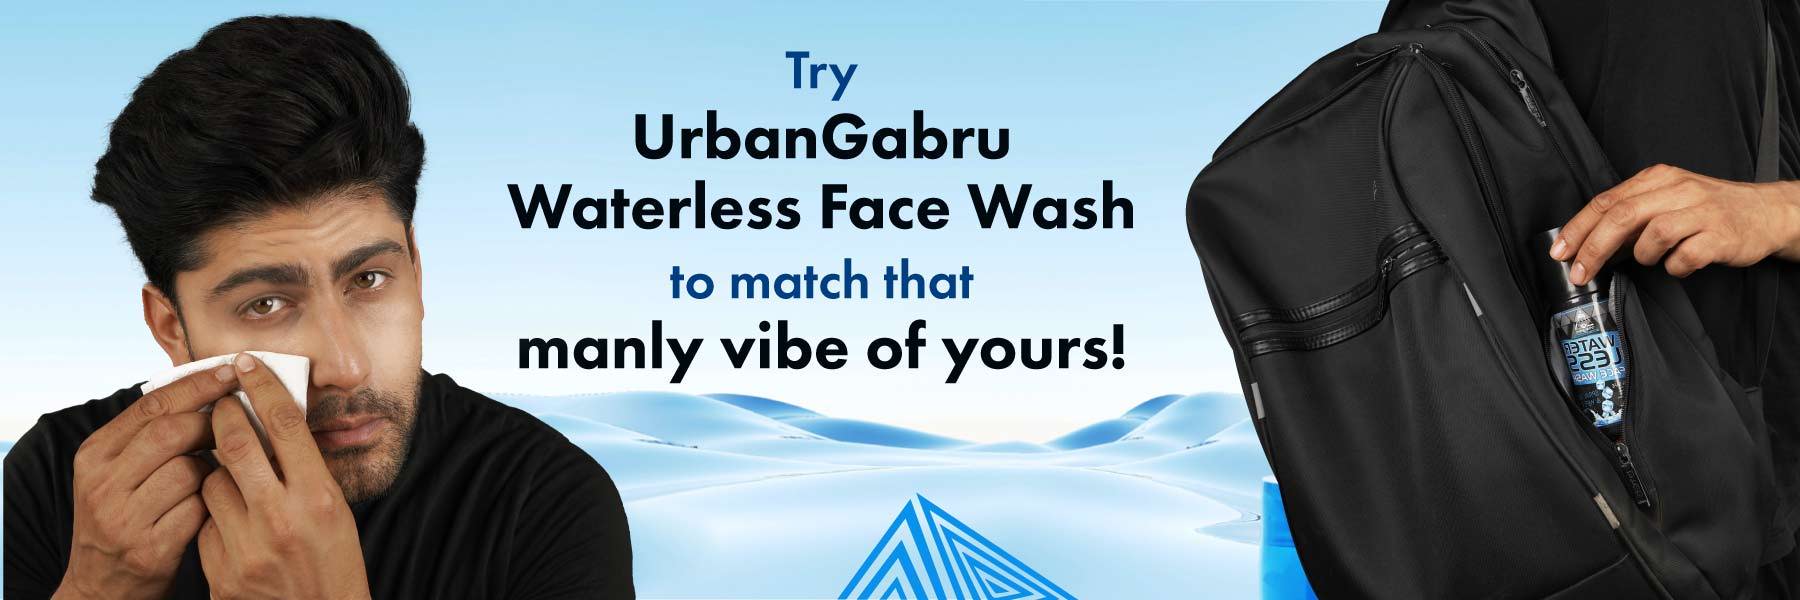 Waterless Face wash